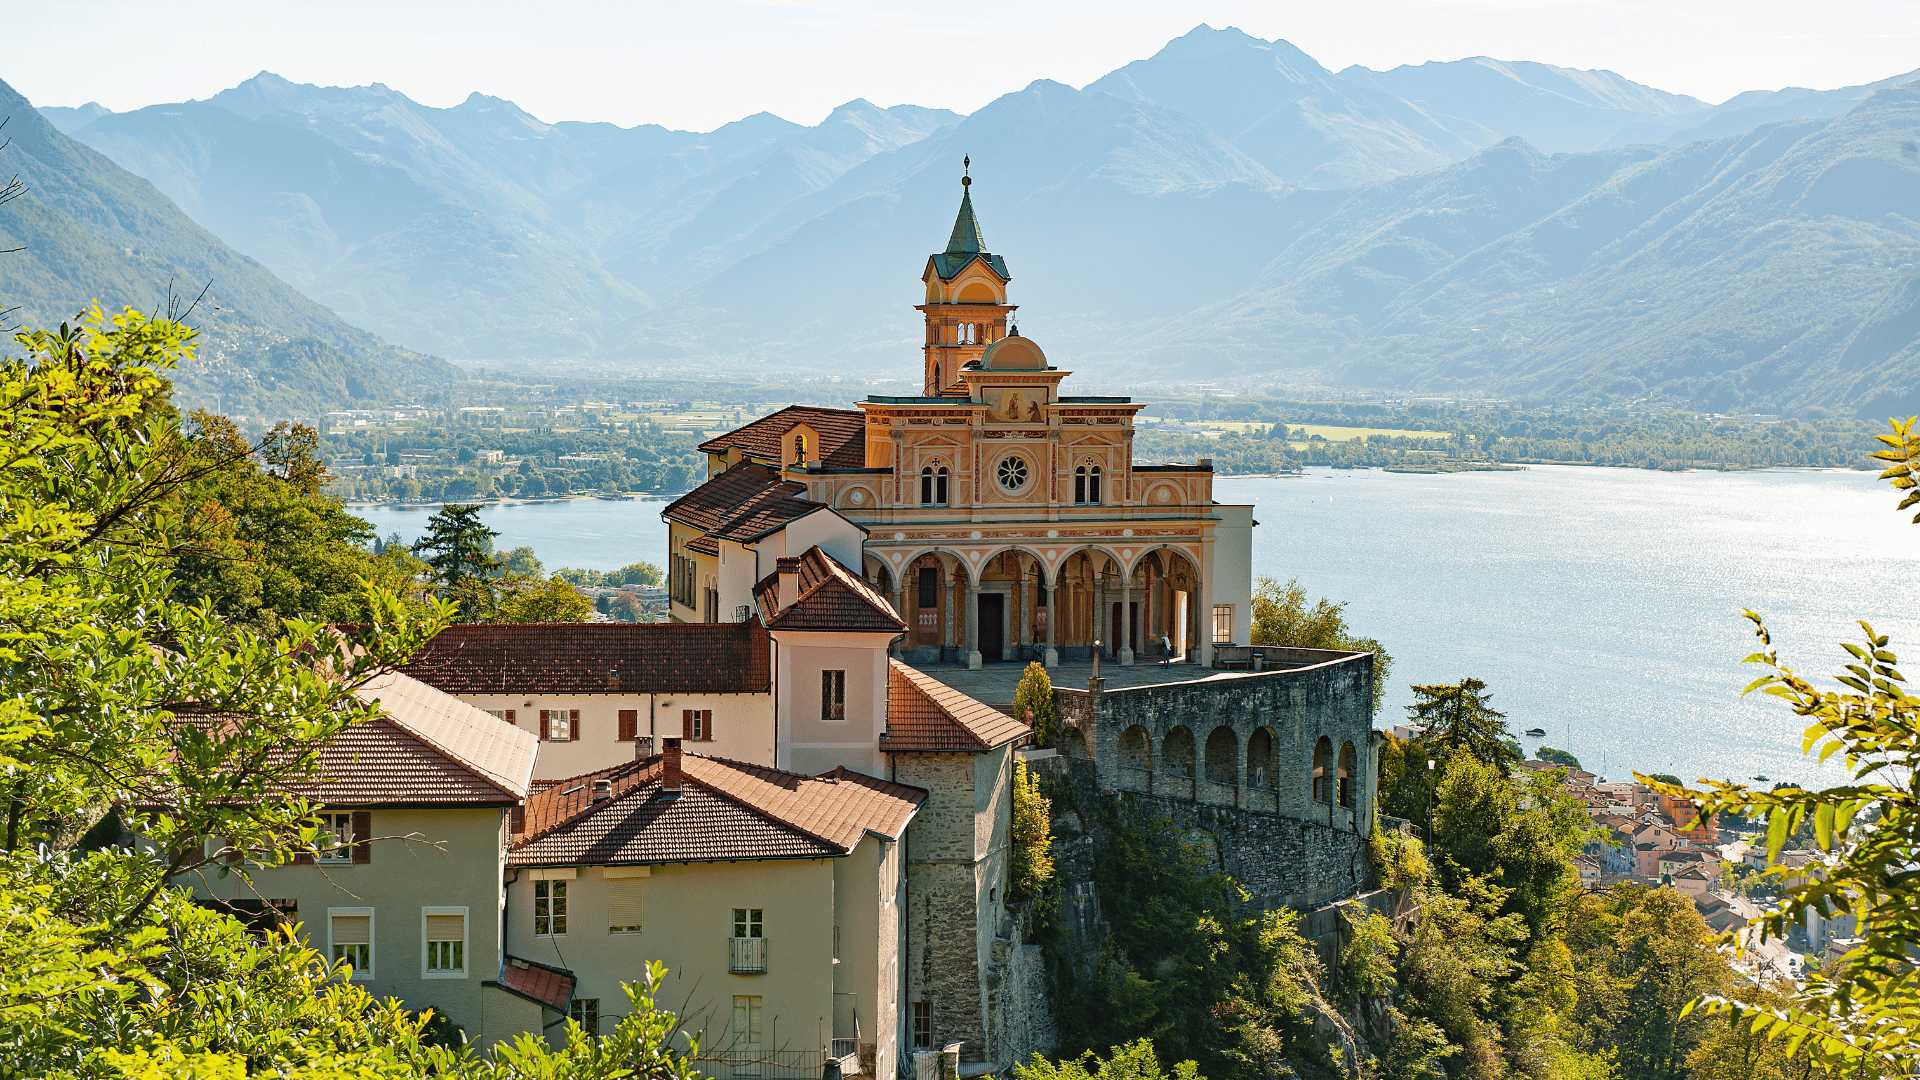 Madonna del Sasso overlooking Lake Maggiore, Switzerland